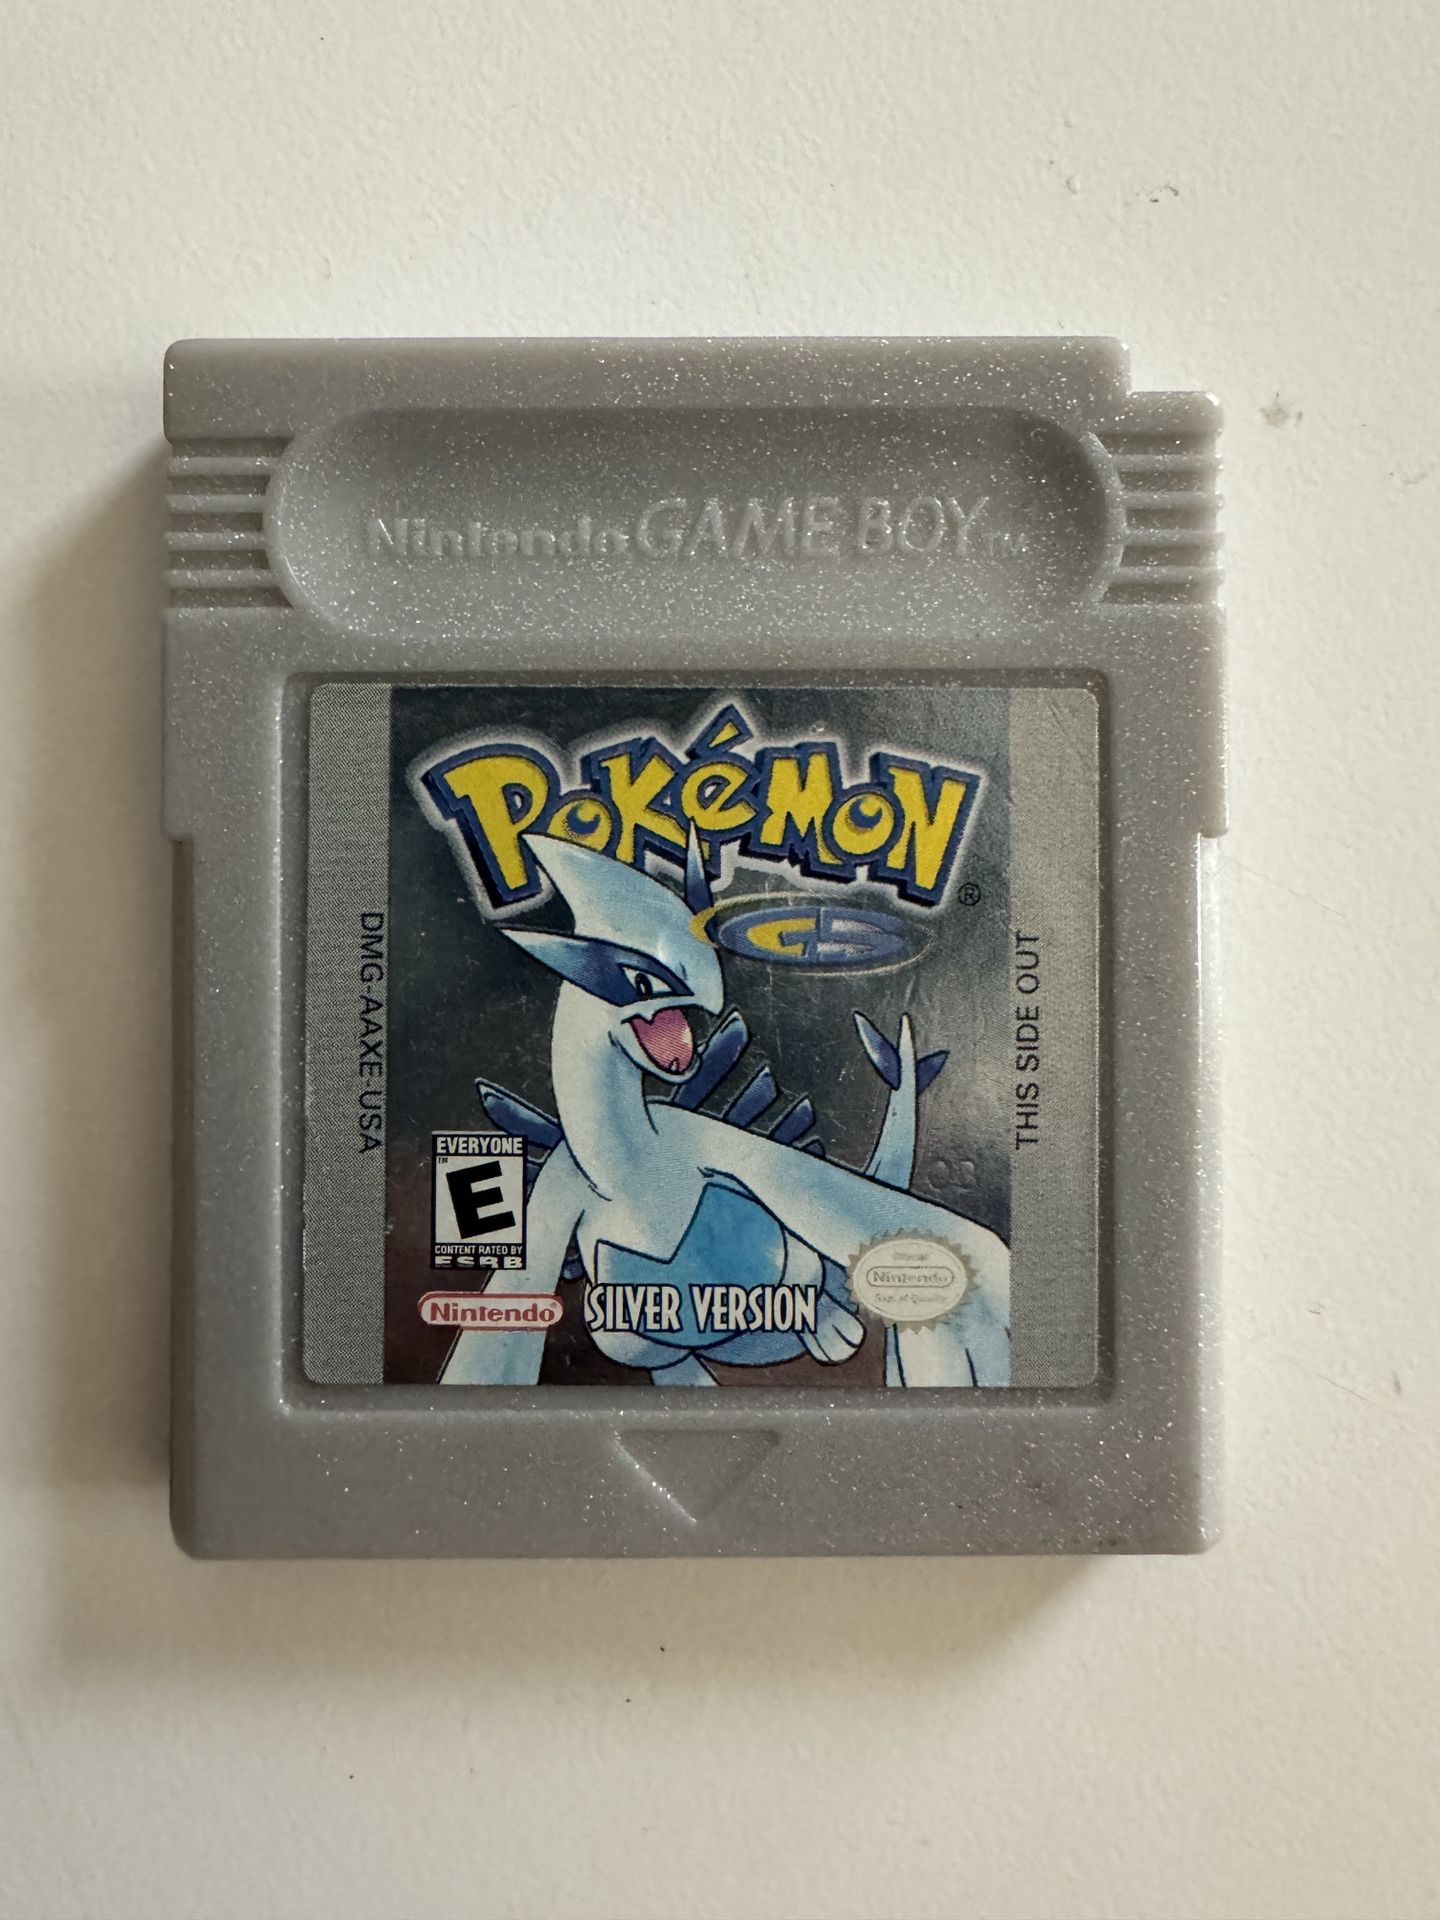 Pokémon Silver